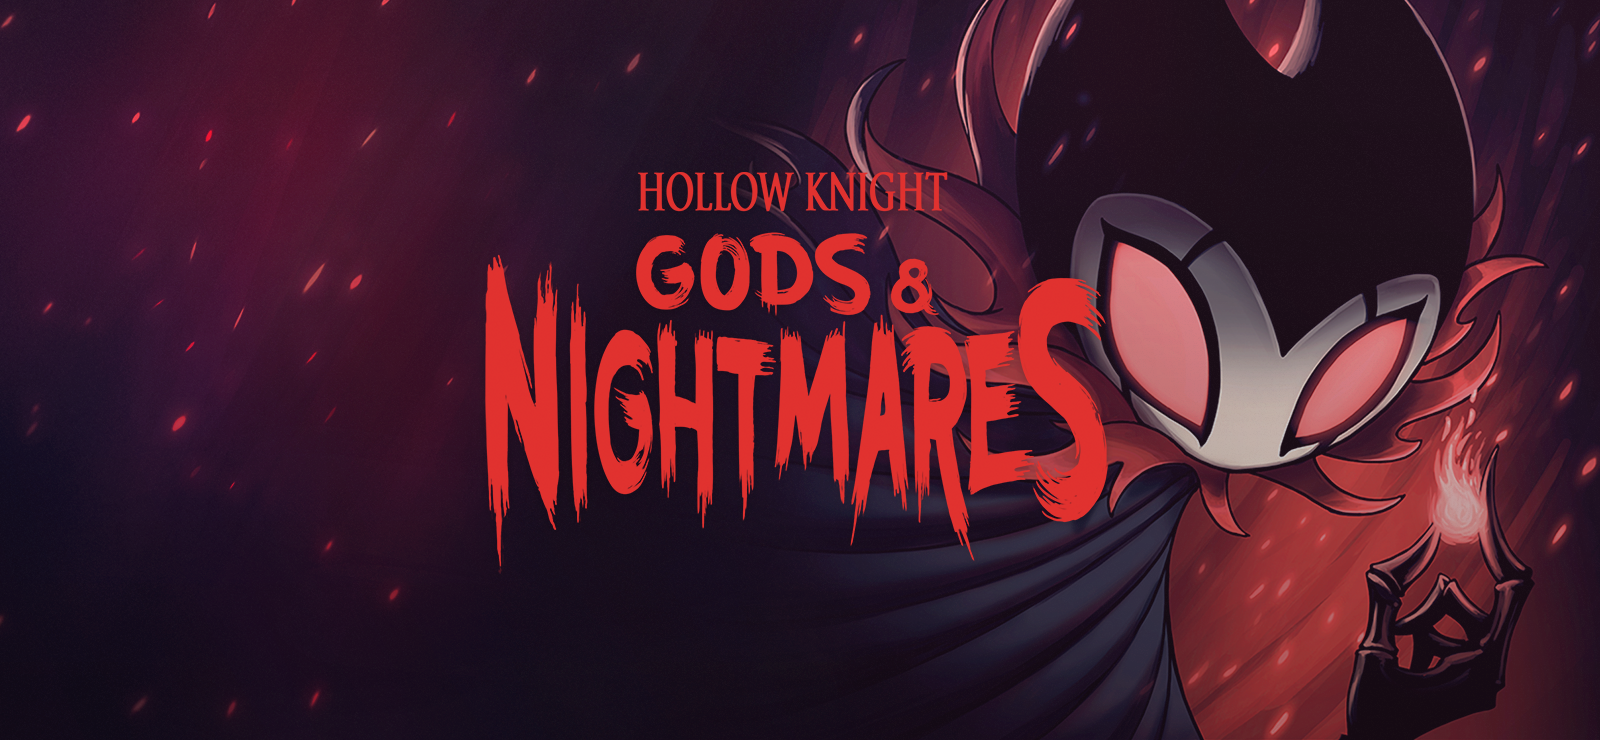 Hollow Knight - Gods & Nightmares